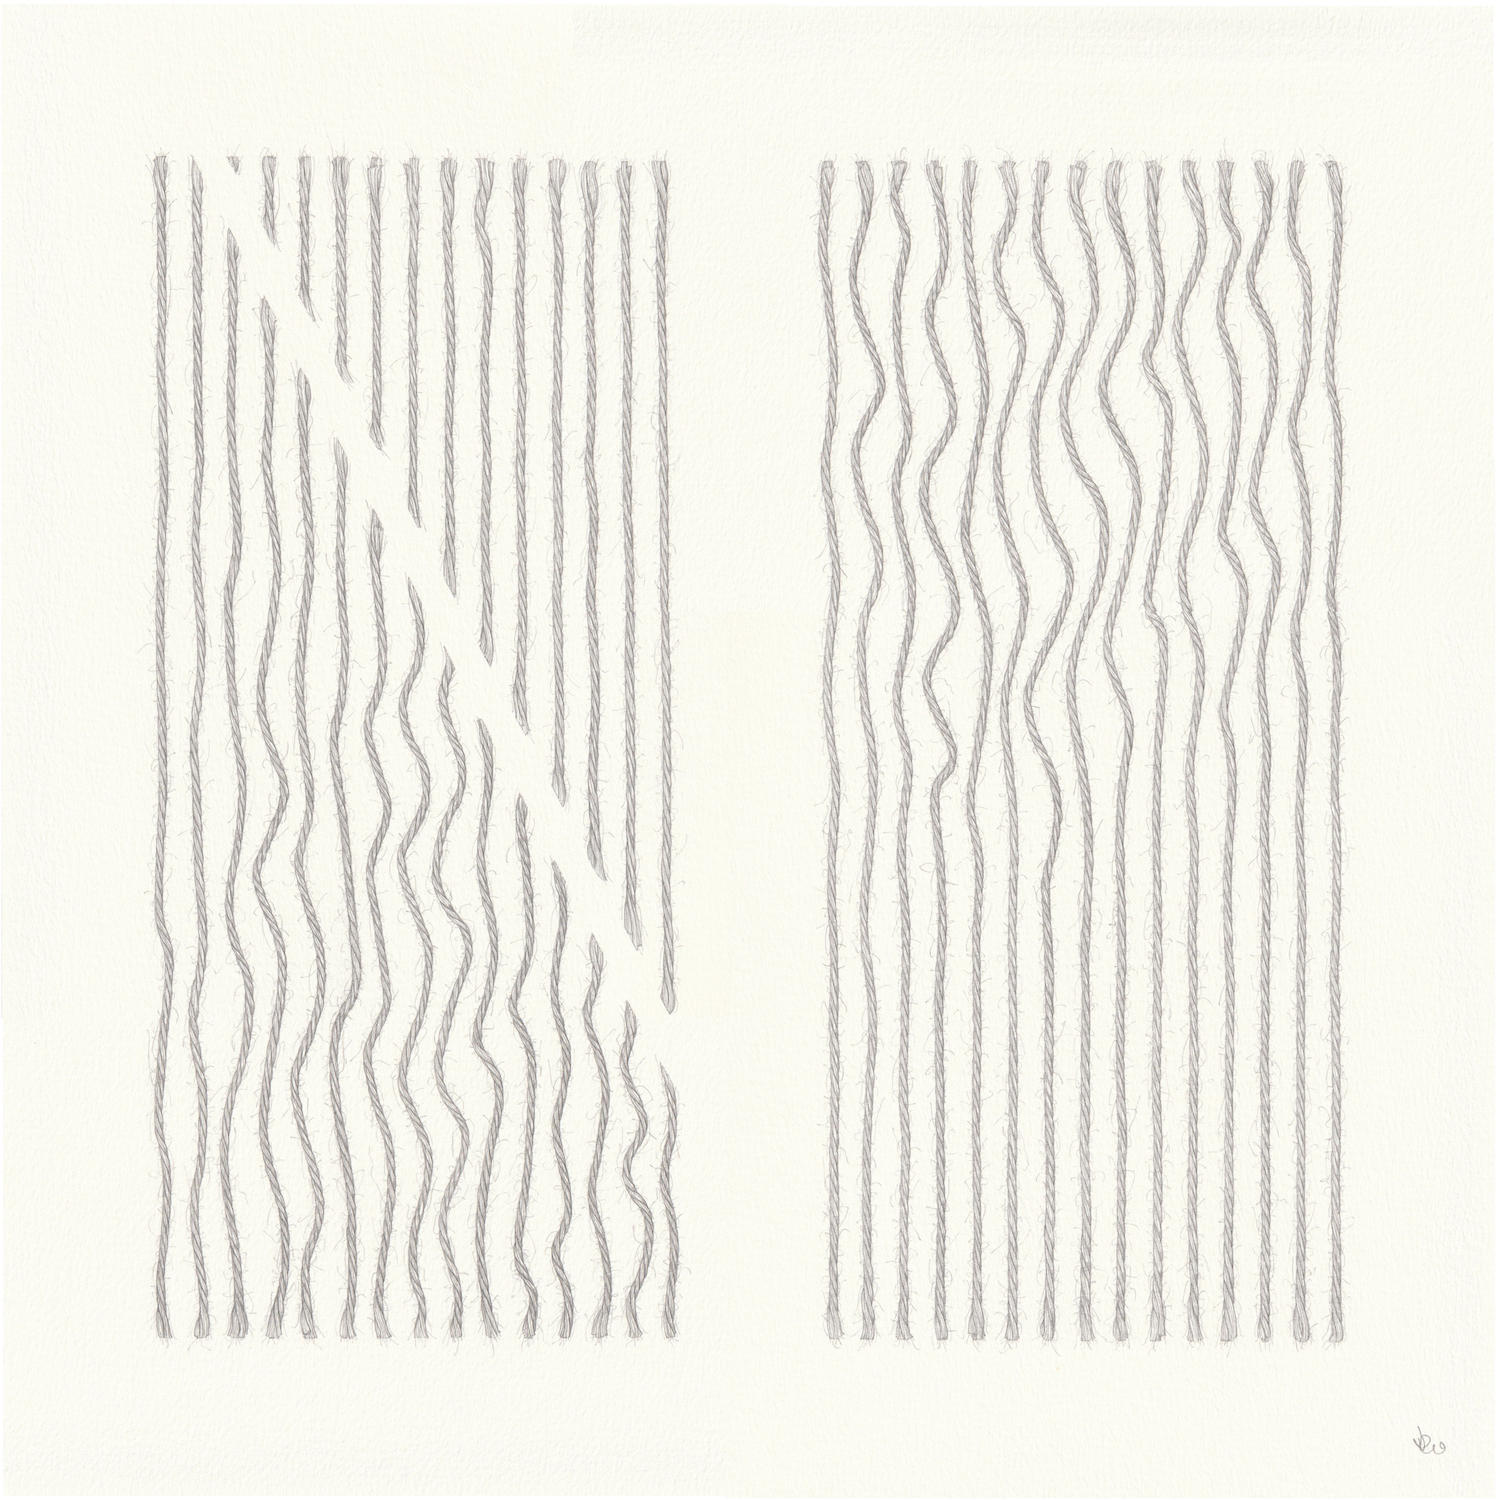 Duo 2 (38 x 38 cm) pencil on paper